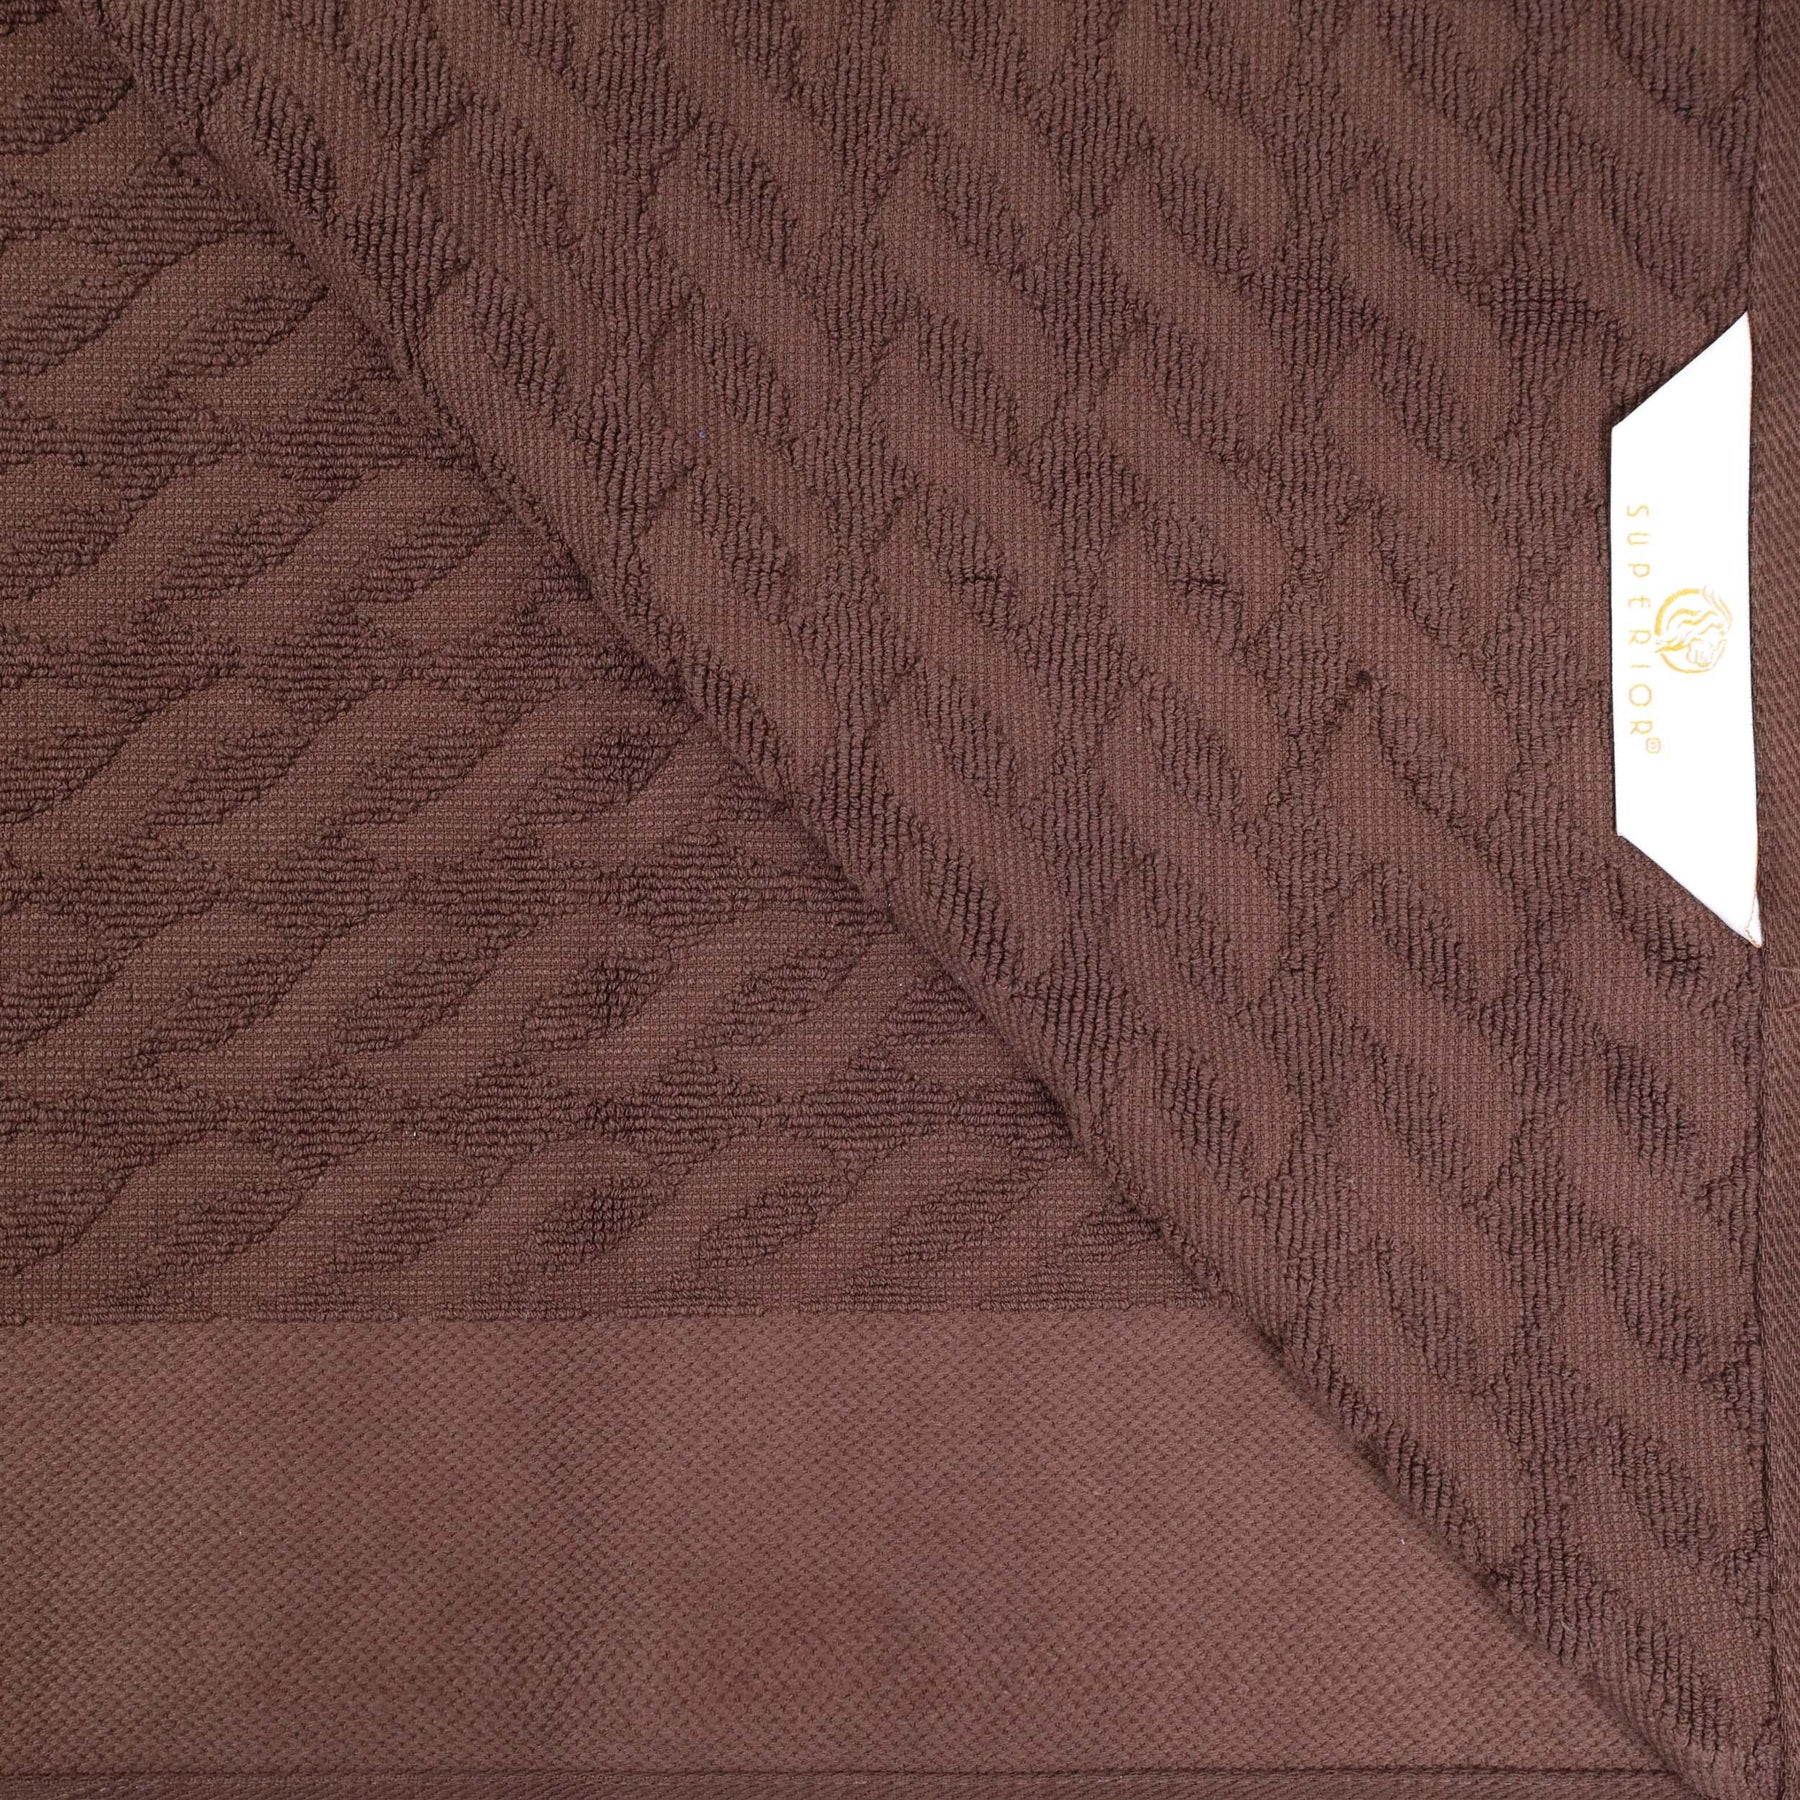 Premium Turkish Cotton Jacquard Herringbone and Solid 8-Piece Towel Set -  Chocolate